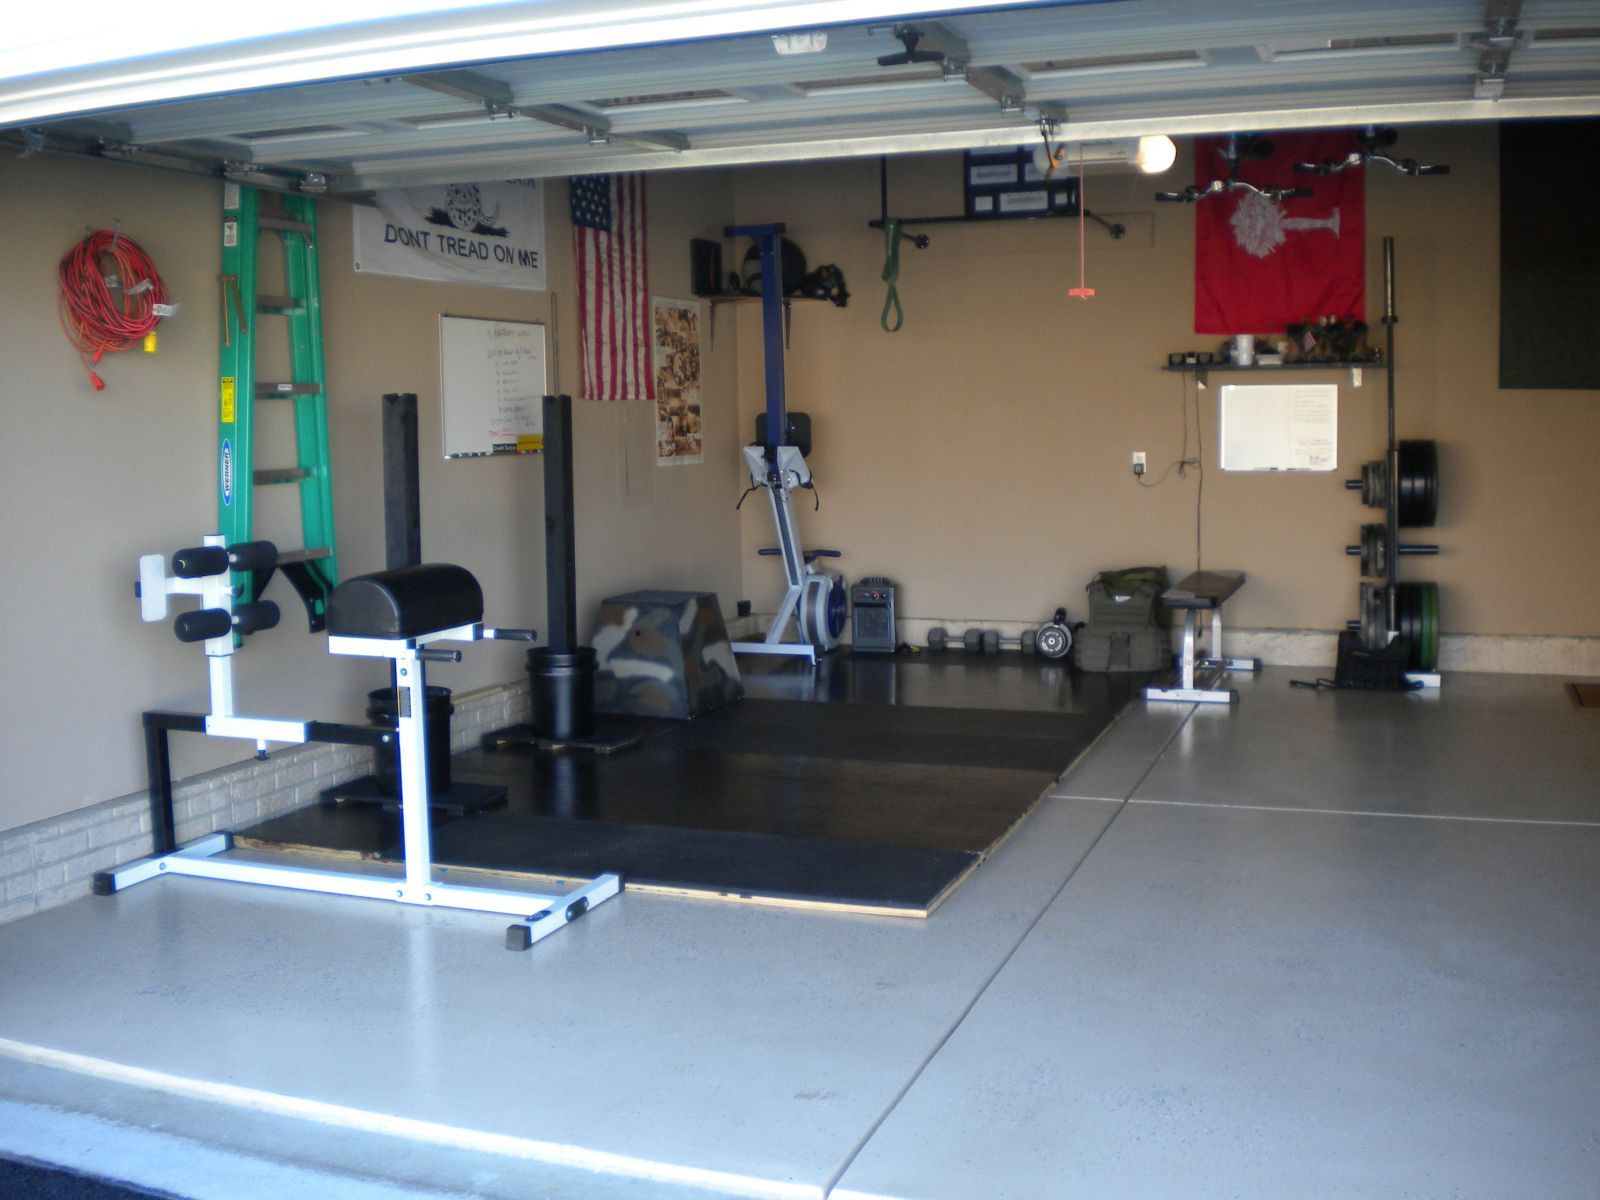 Best ideas about Home Gym Ideas Garage
. Save or Pin Best 25 Home gym garage ideas on Pinterest Now.